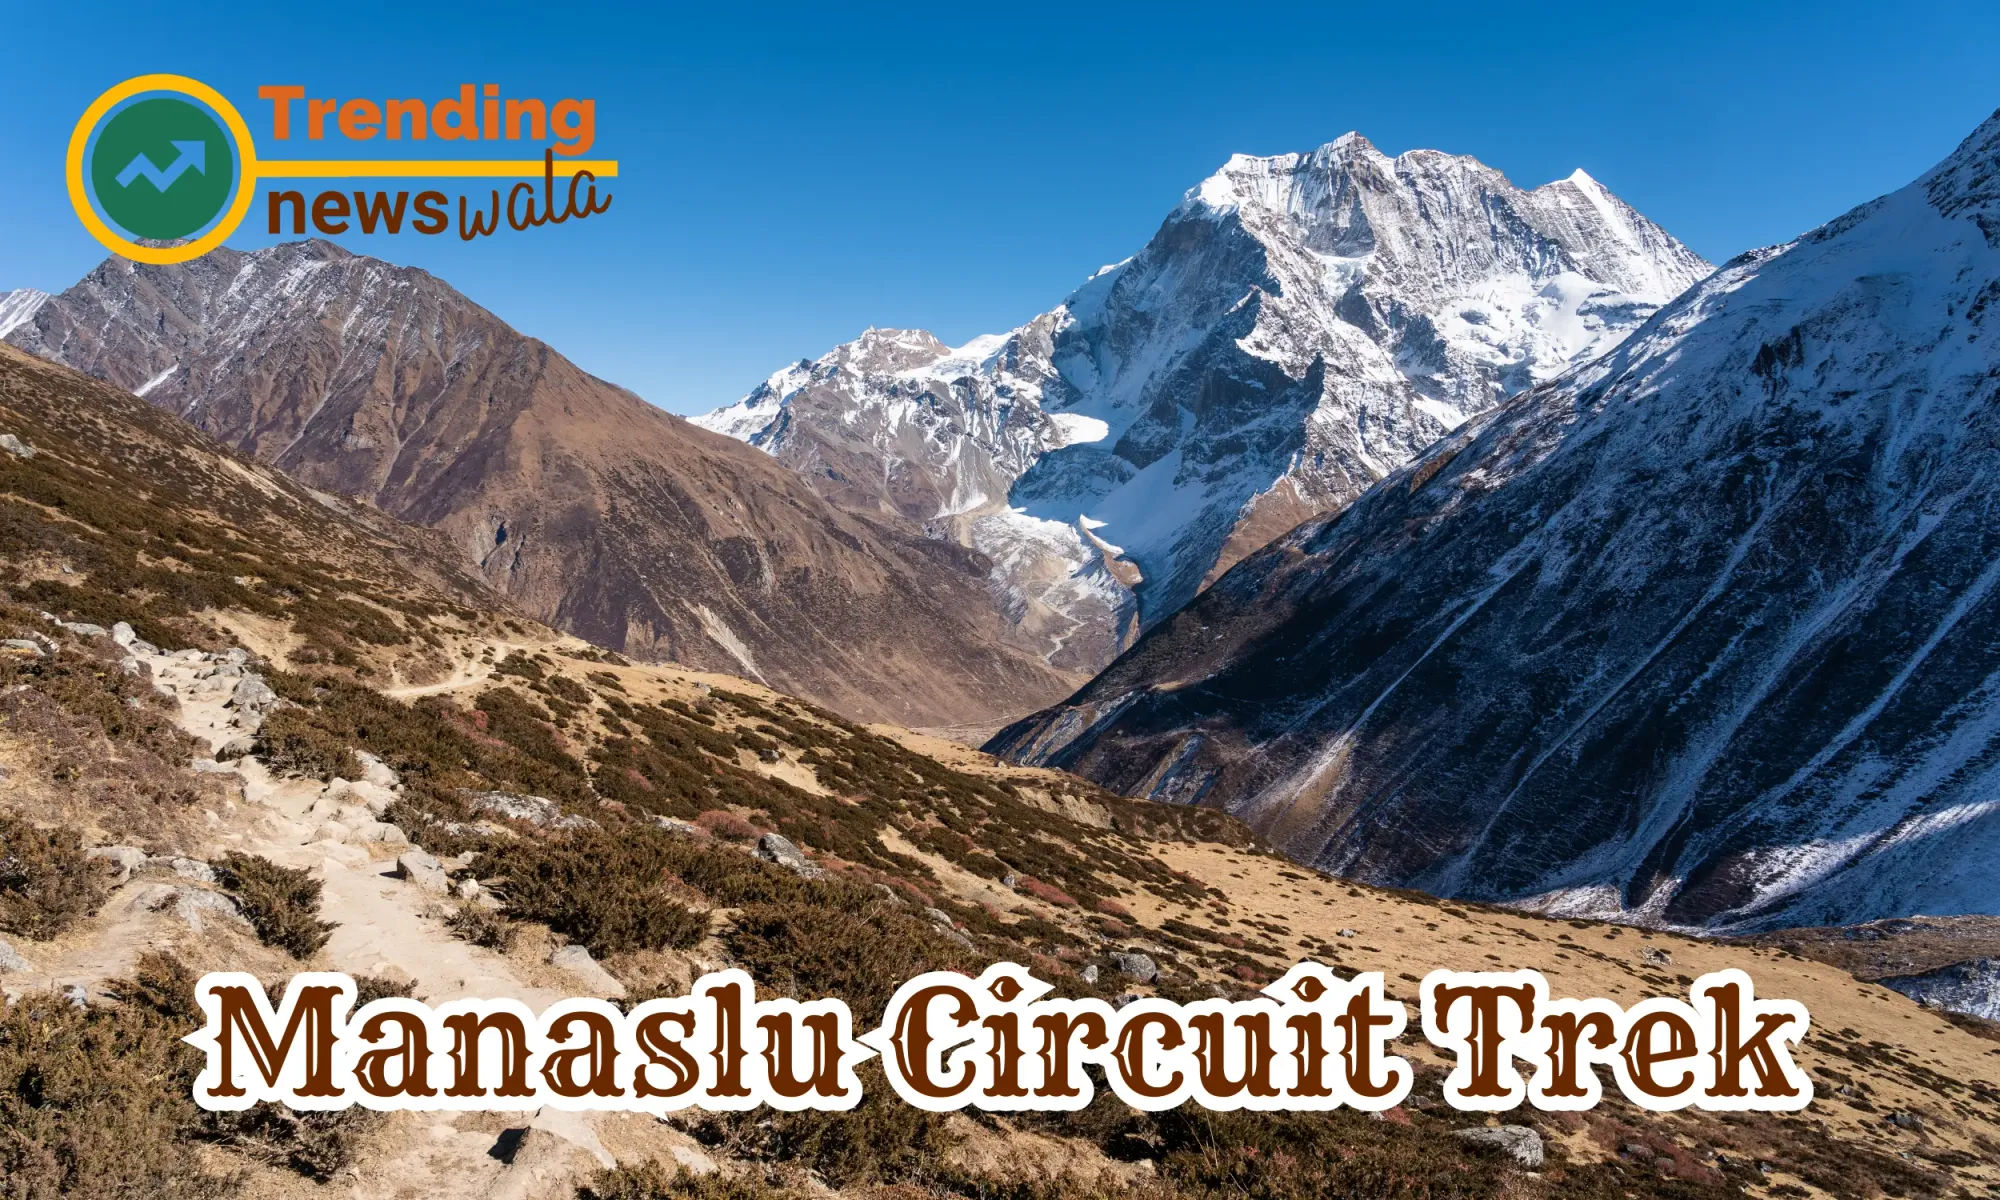 The Manaslu Circuit Trek is a mesmerizing and challenging trekking adventure